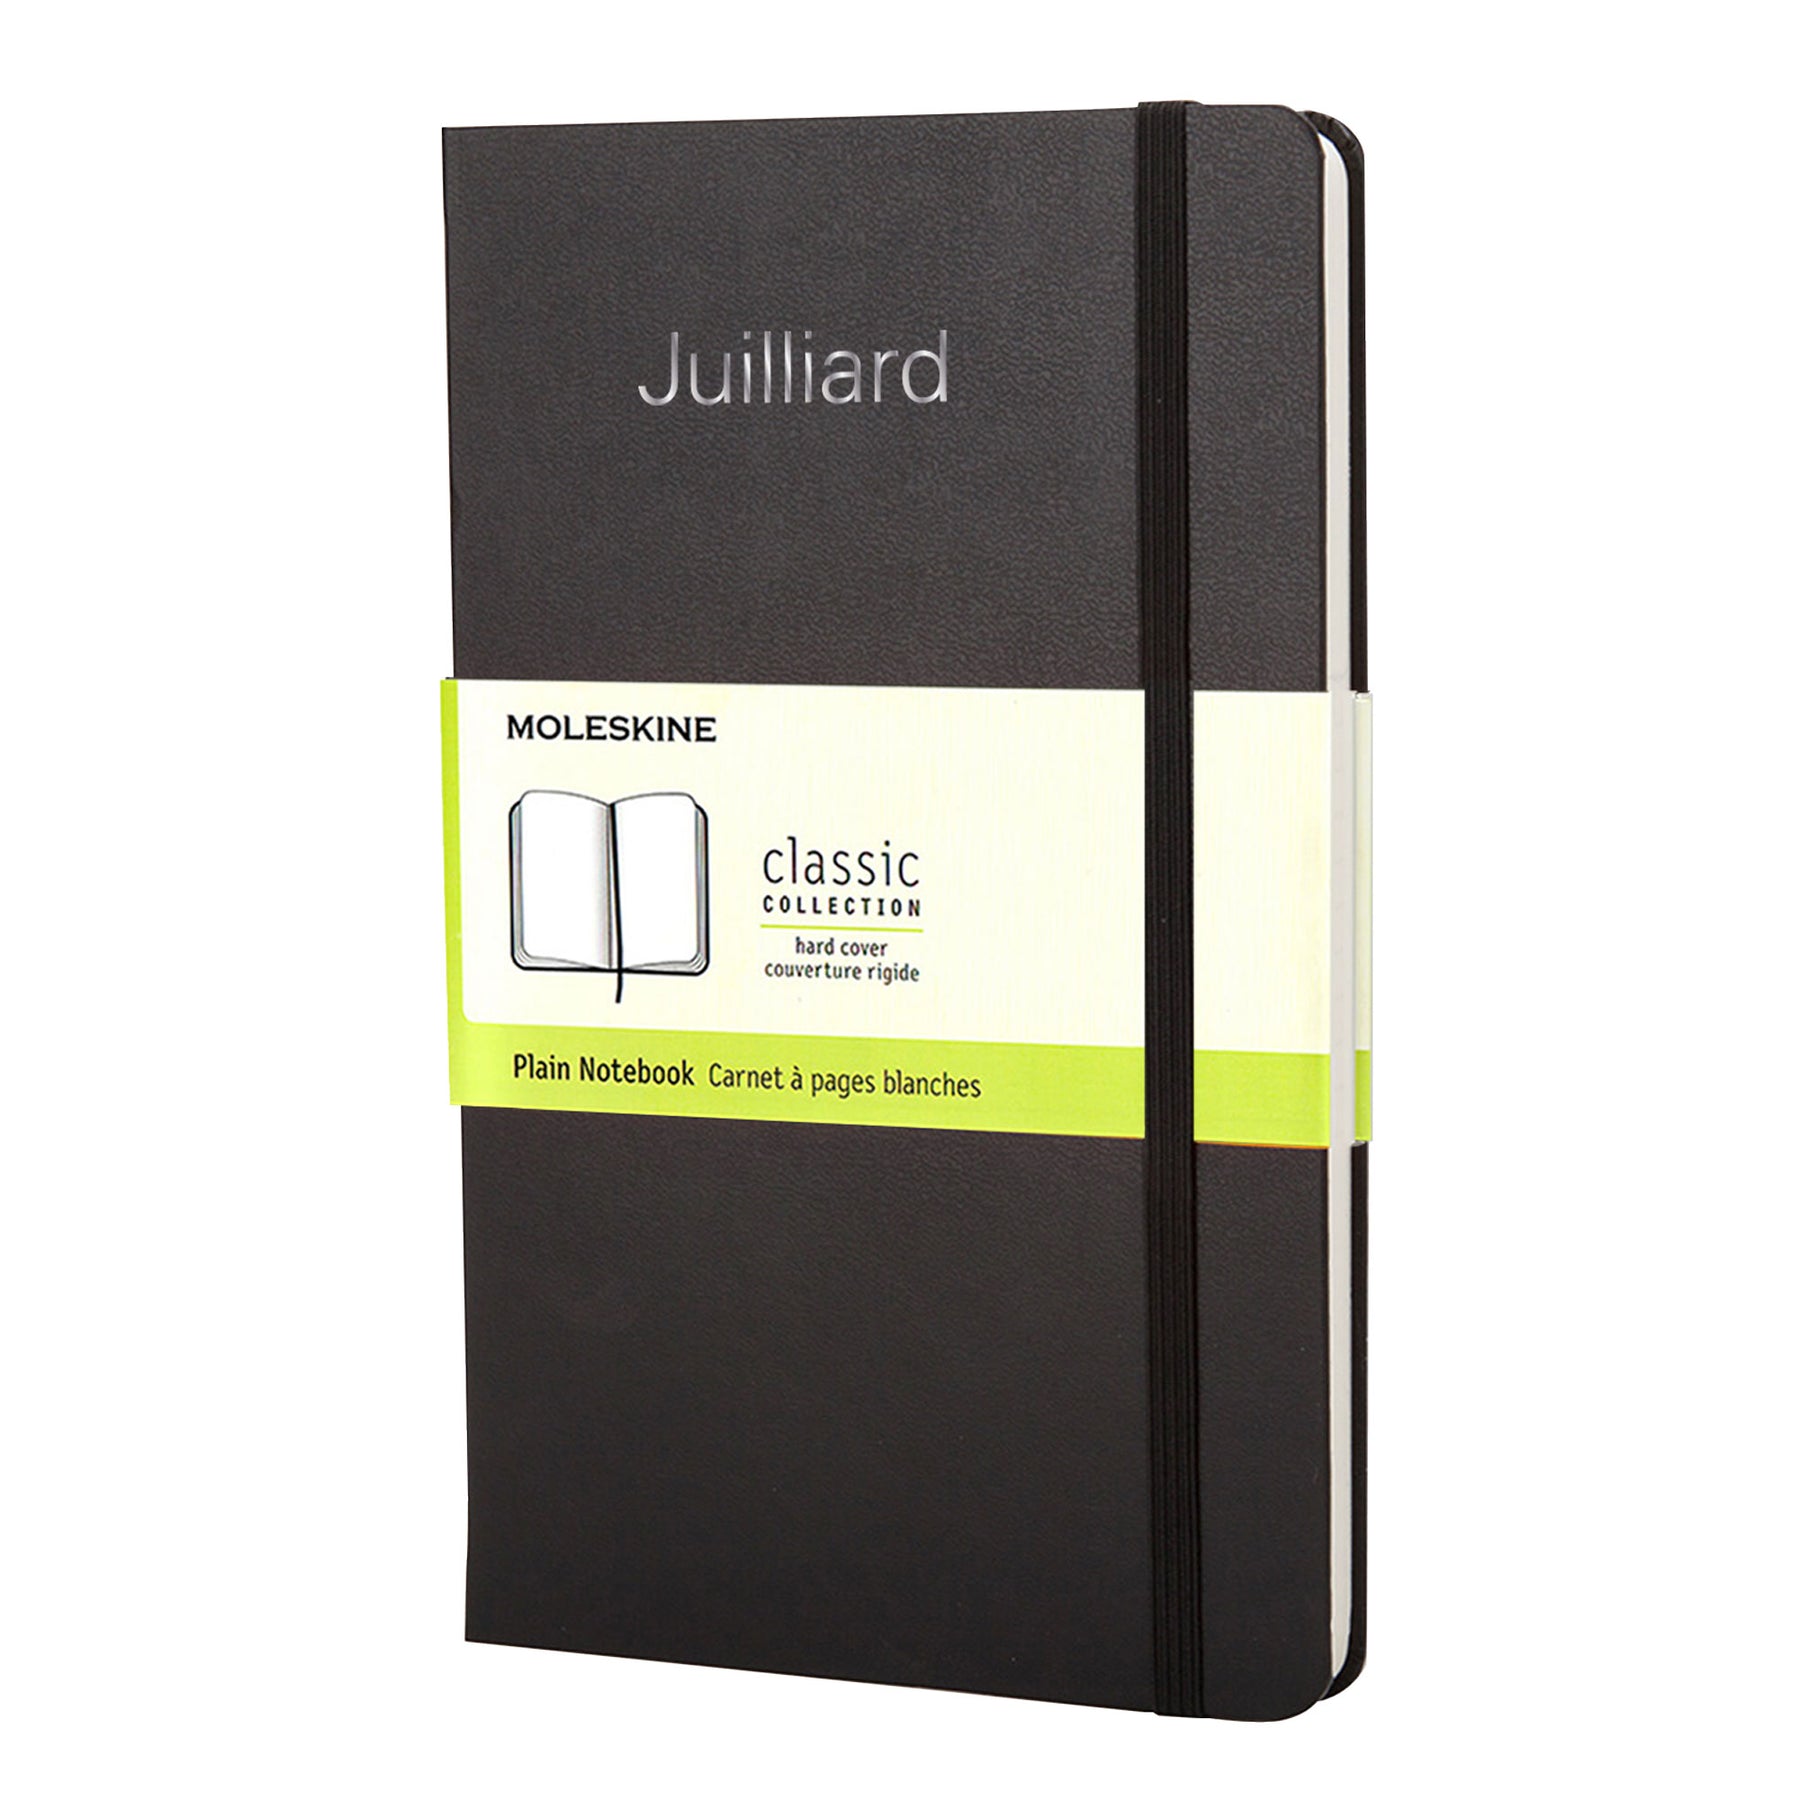 Moleskine: Juilliard Unlined/Plain Notebook Large (5" x 8.25")